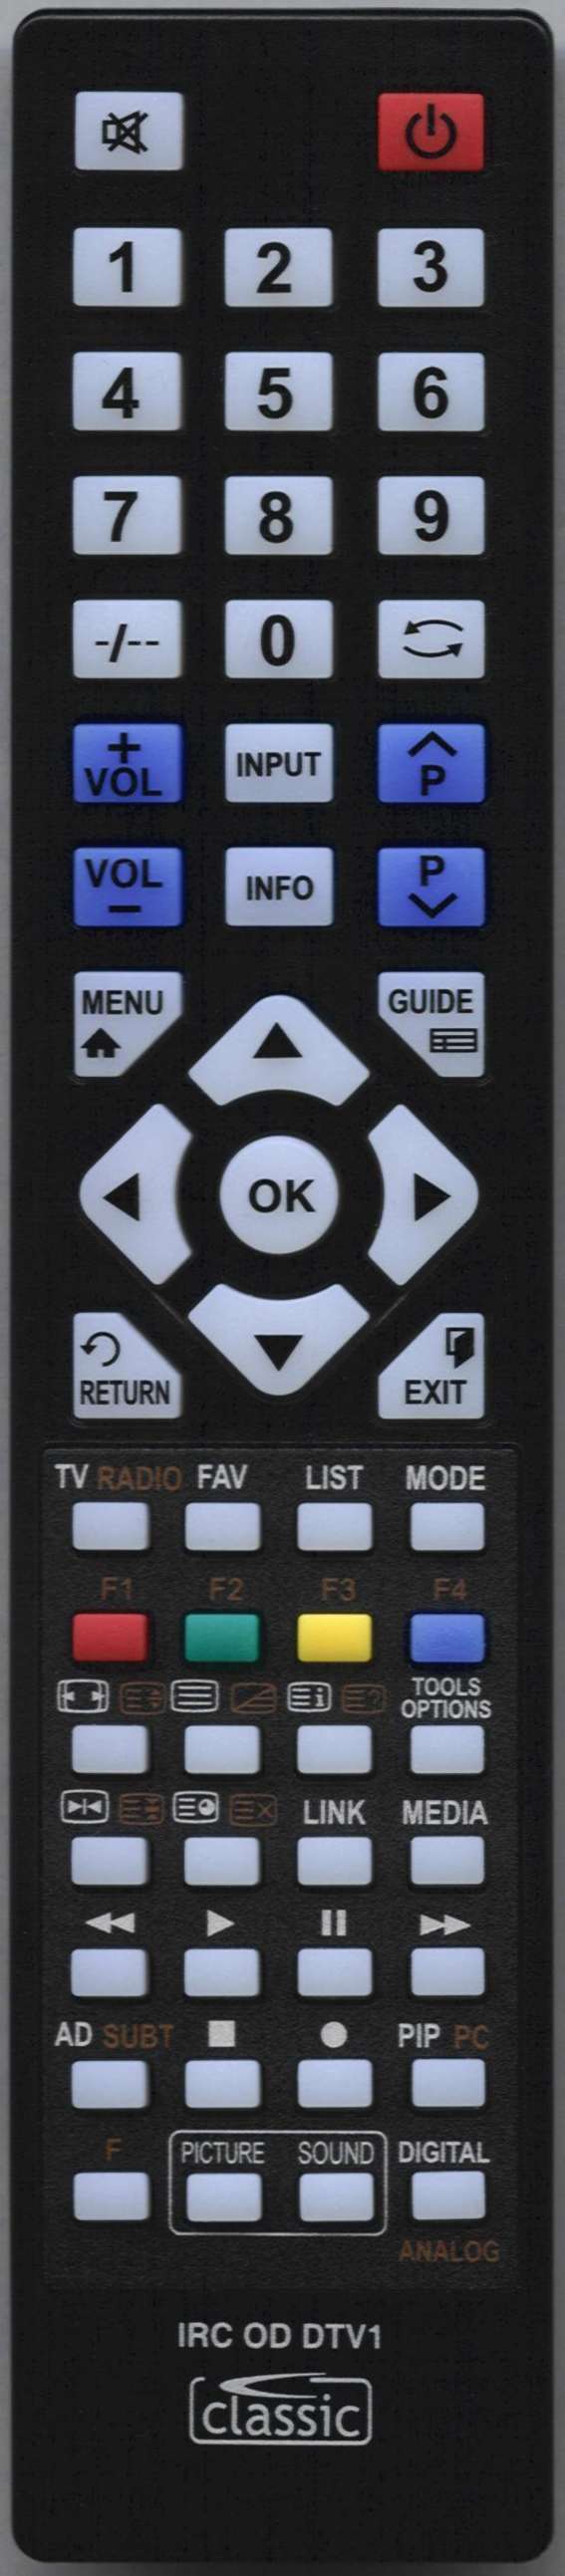 SONY KDL-42W653A Remote Control Alternative